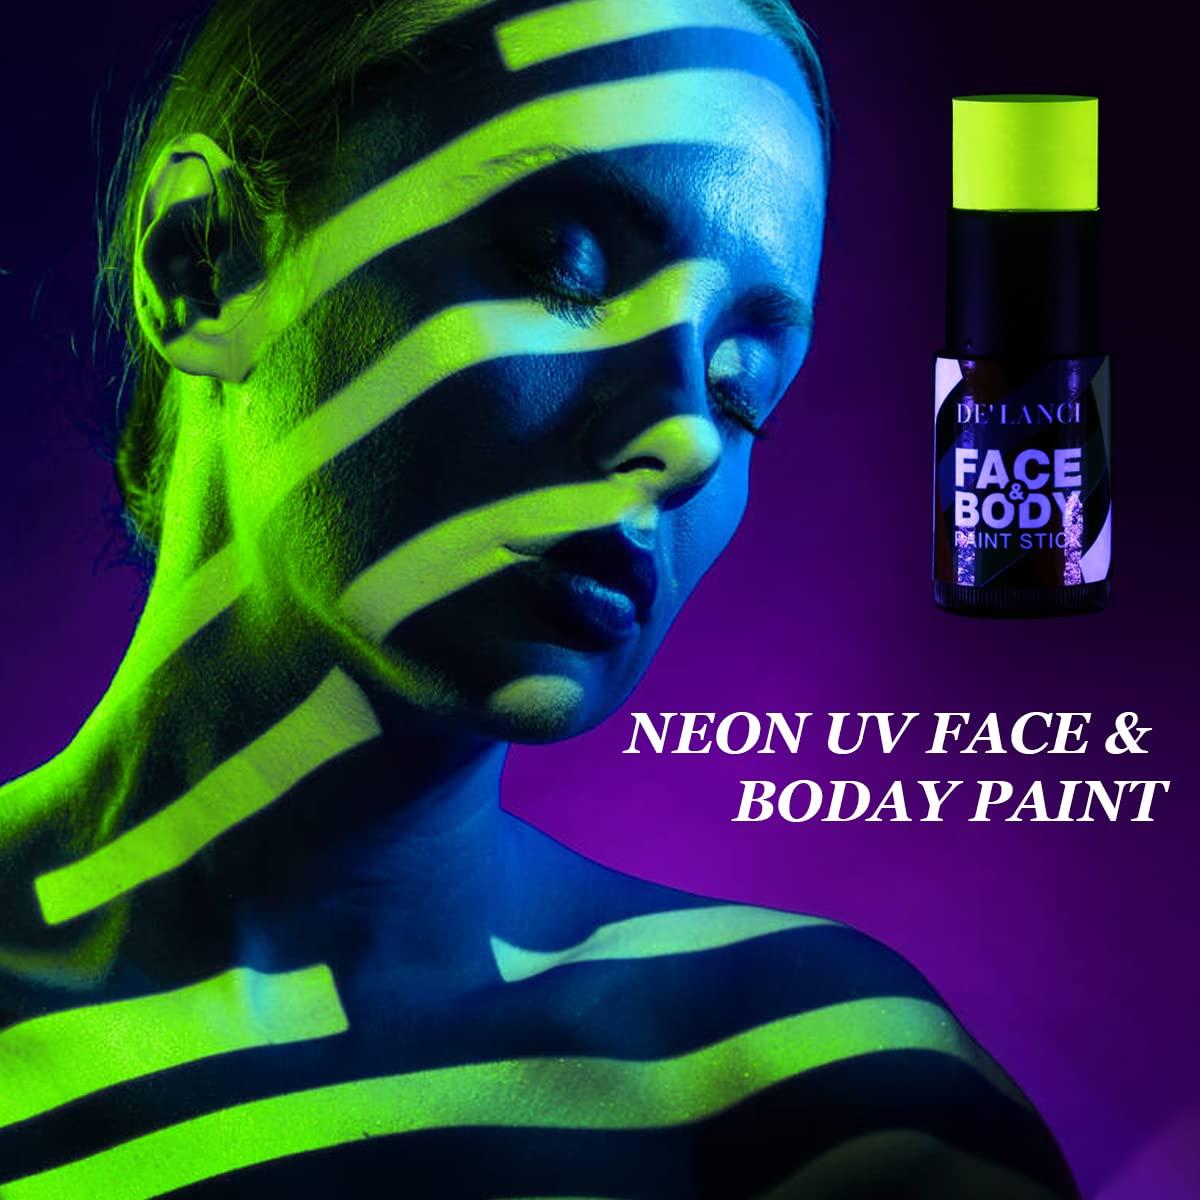 Sports Face Paint Stick, Cream Blendable Body Paint Makeup , Professional  Halloween Makeup Cosplay Uv Special Effects SFX - AliExpress